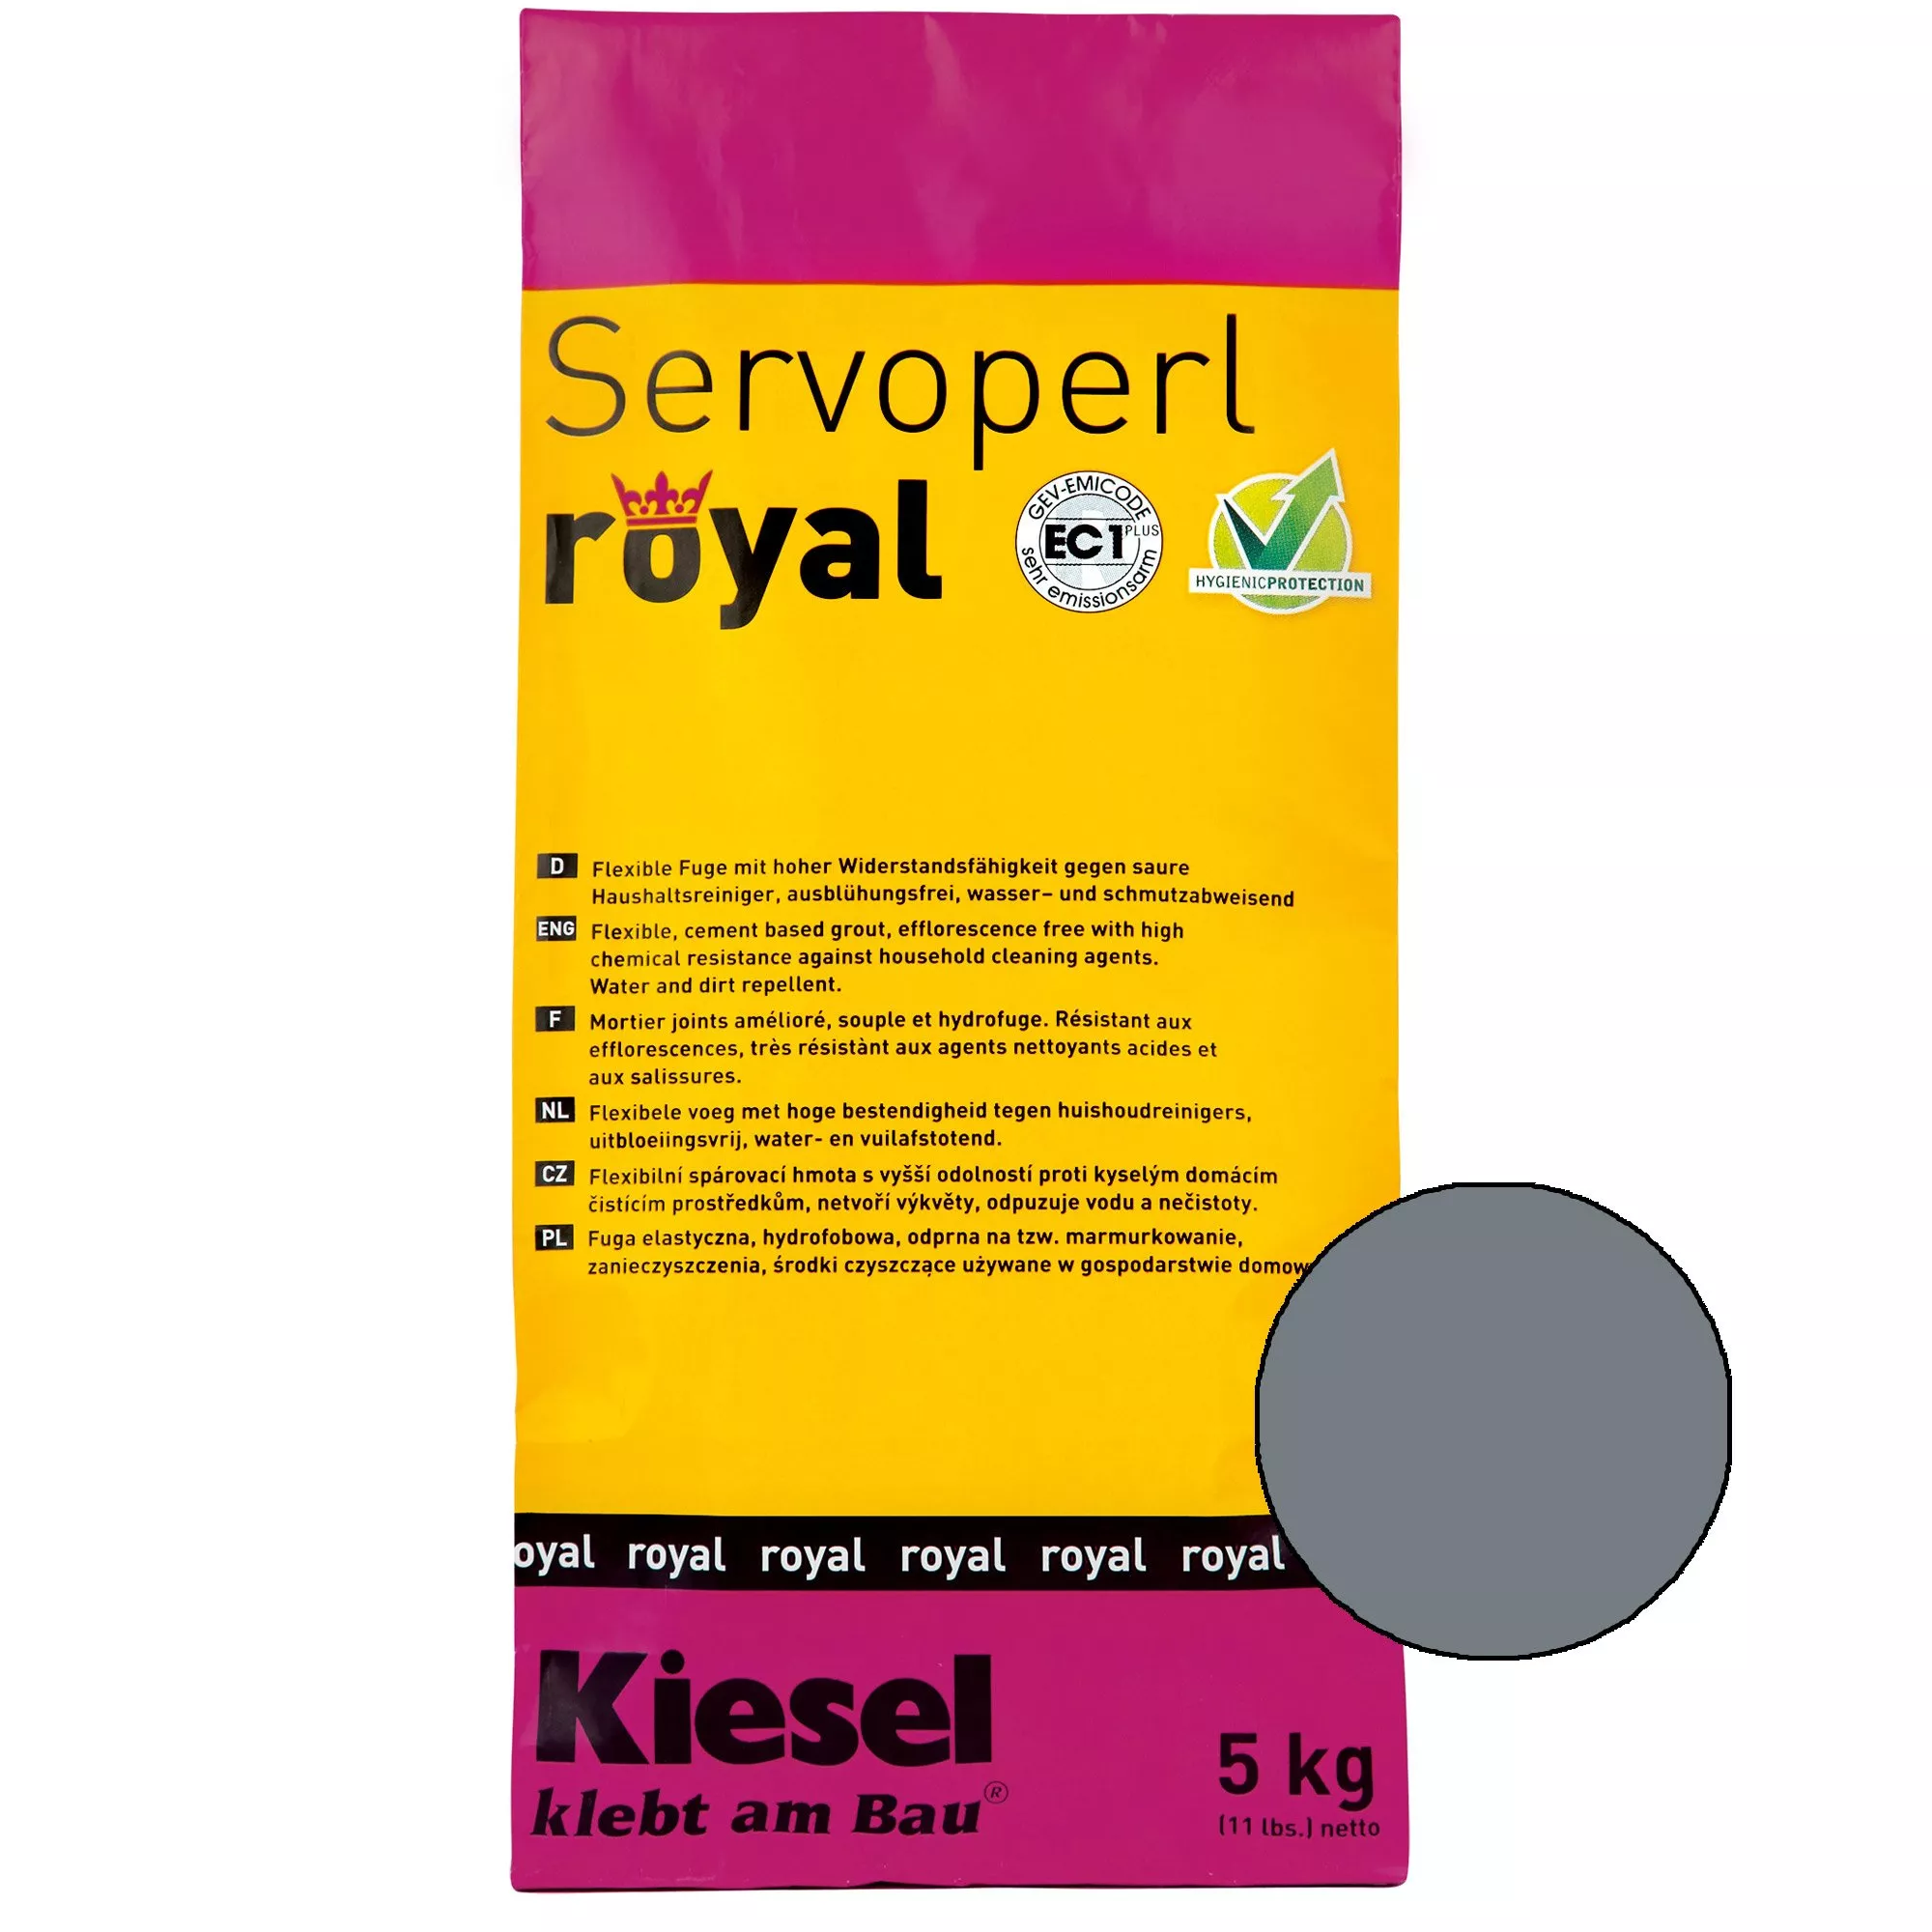 Kiesel Servoperl Royal - Giunto Flessibile, Idrorepellente E Antimacchia (5KG Basalto)